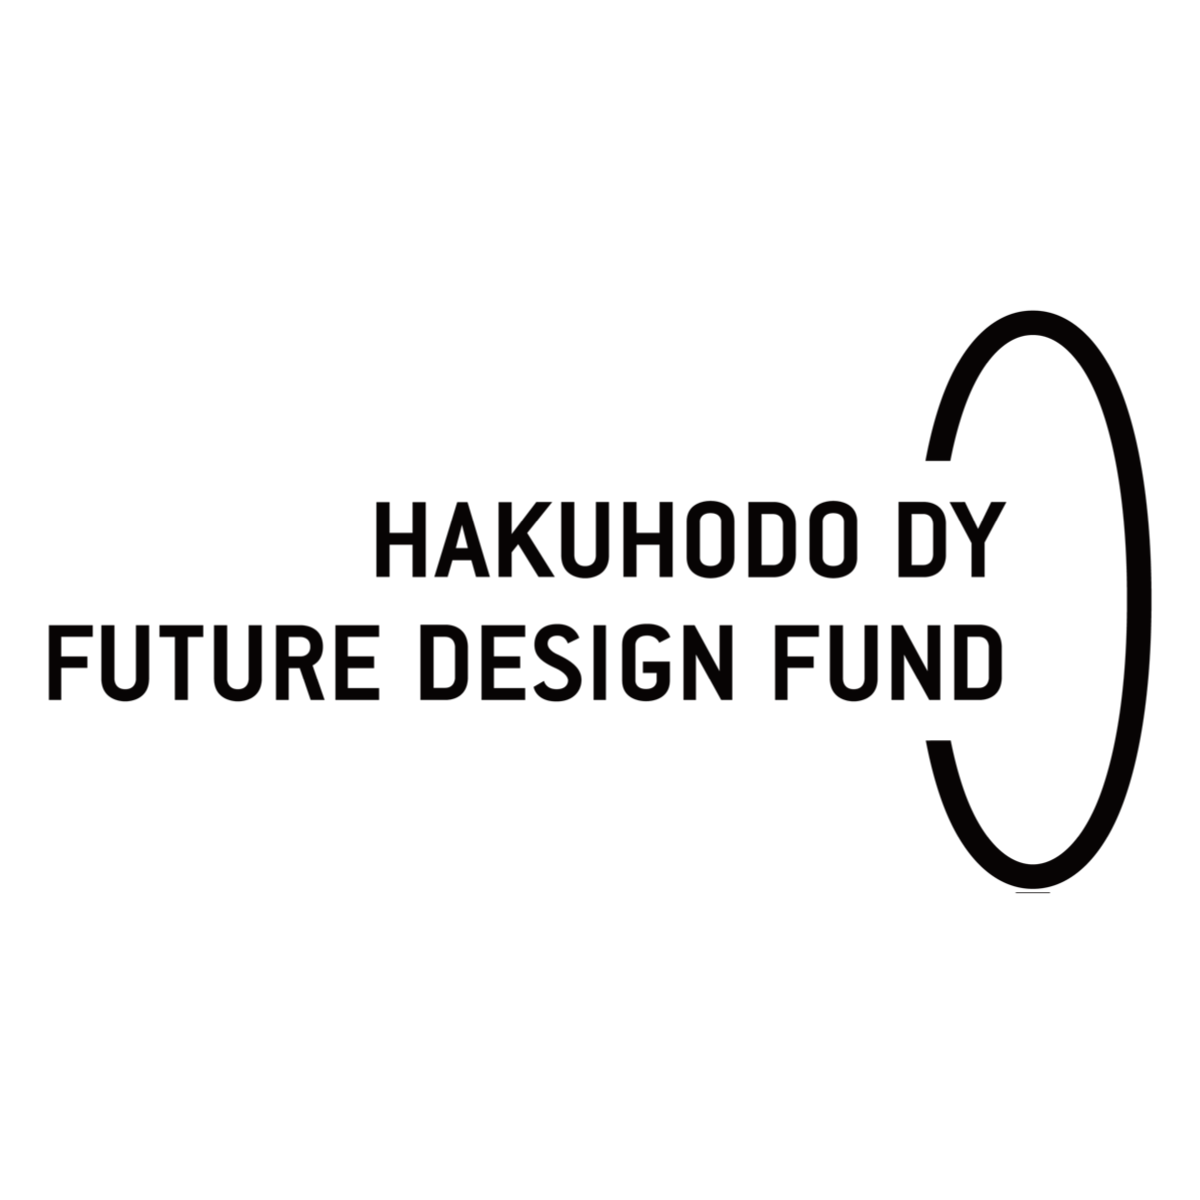 HAKUHODO DY FUTURE DESIGN FUND